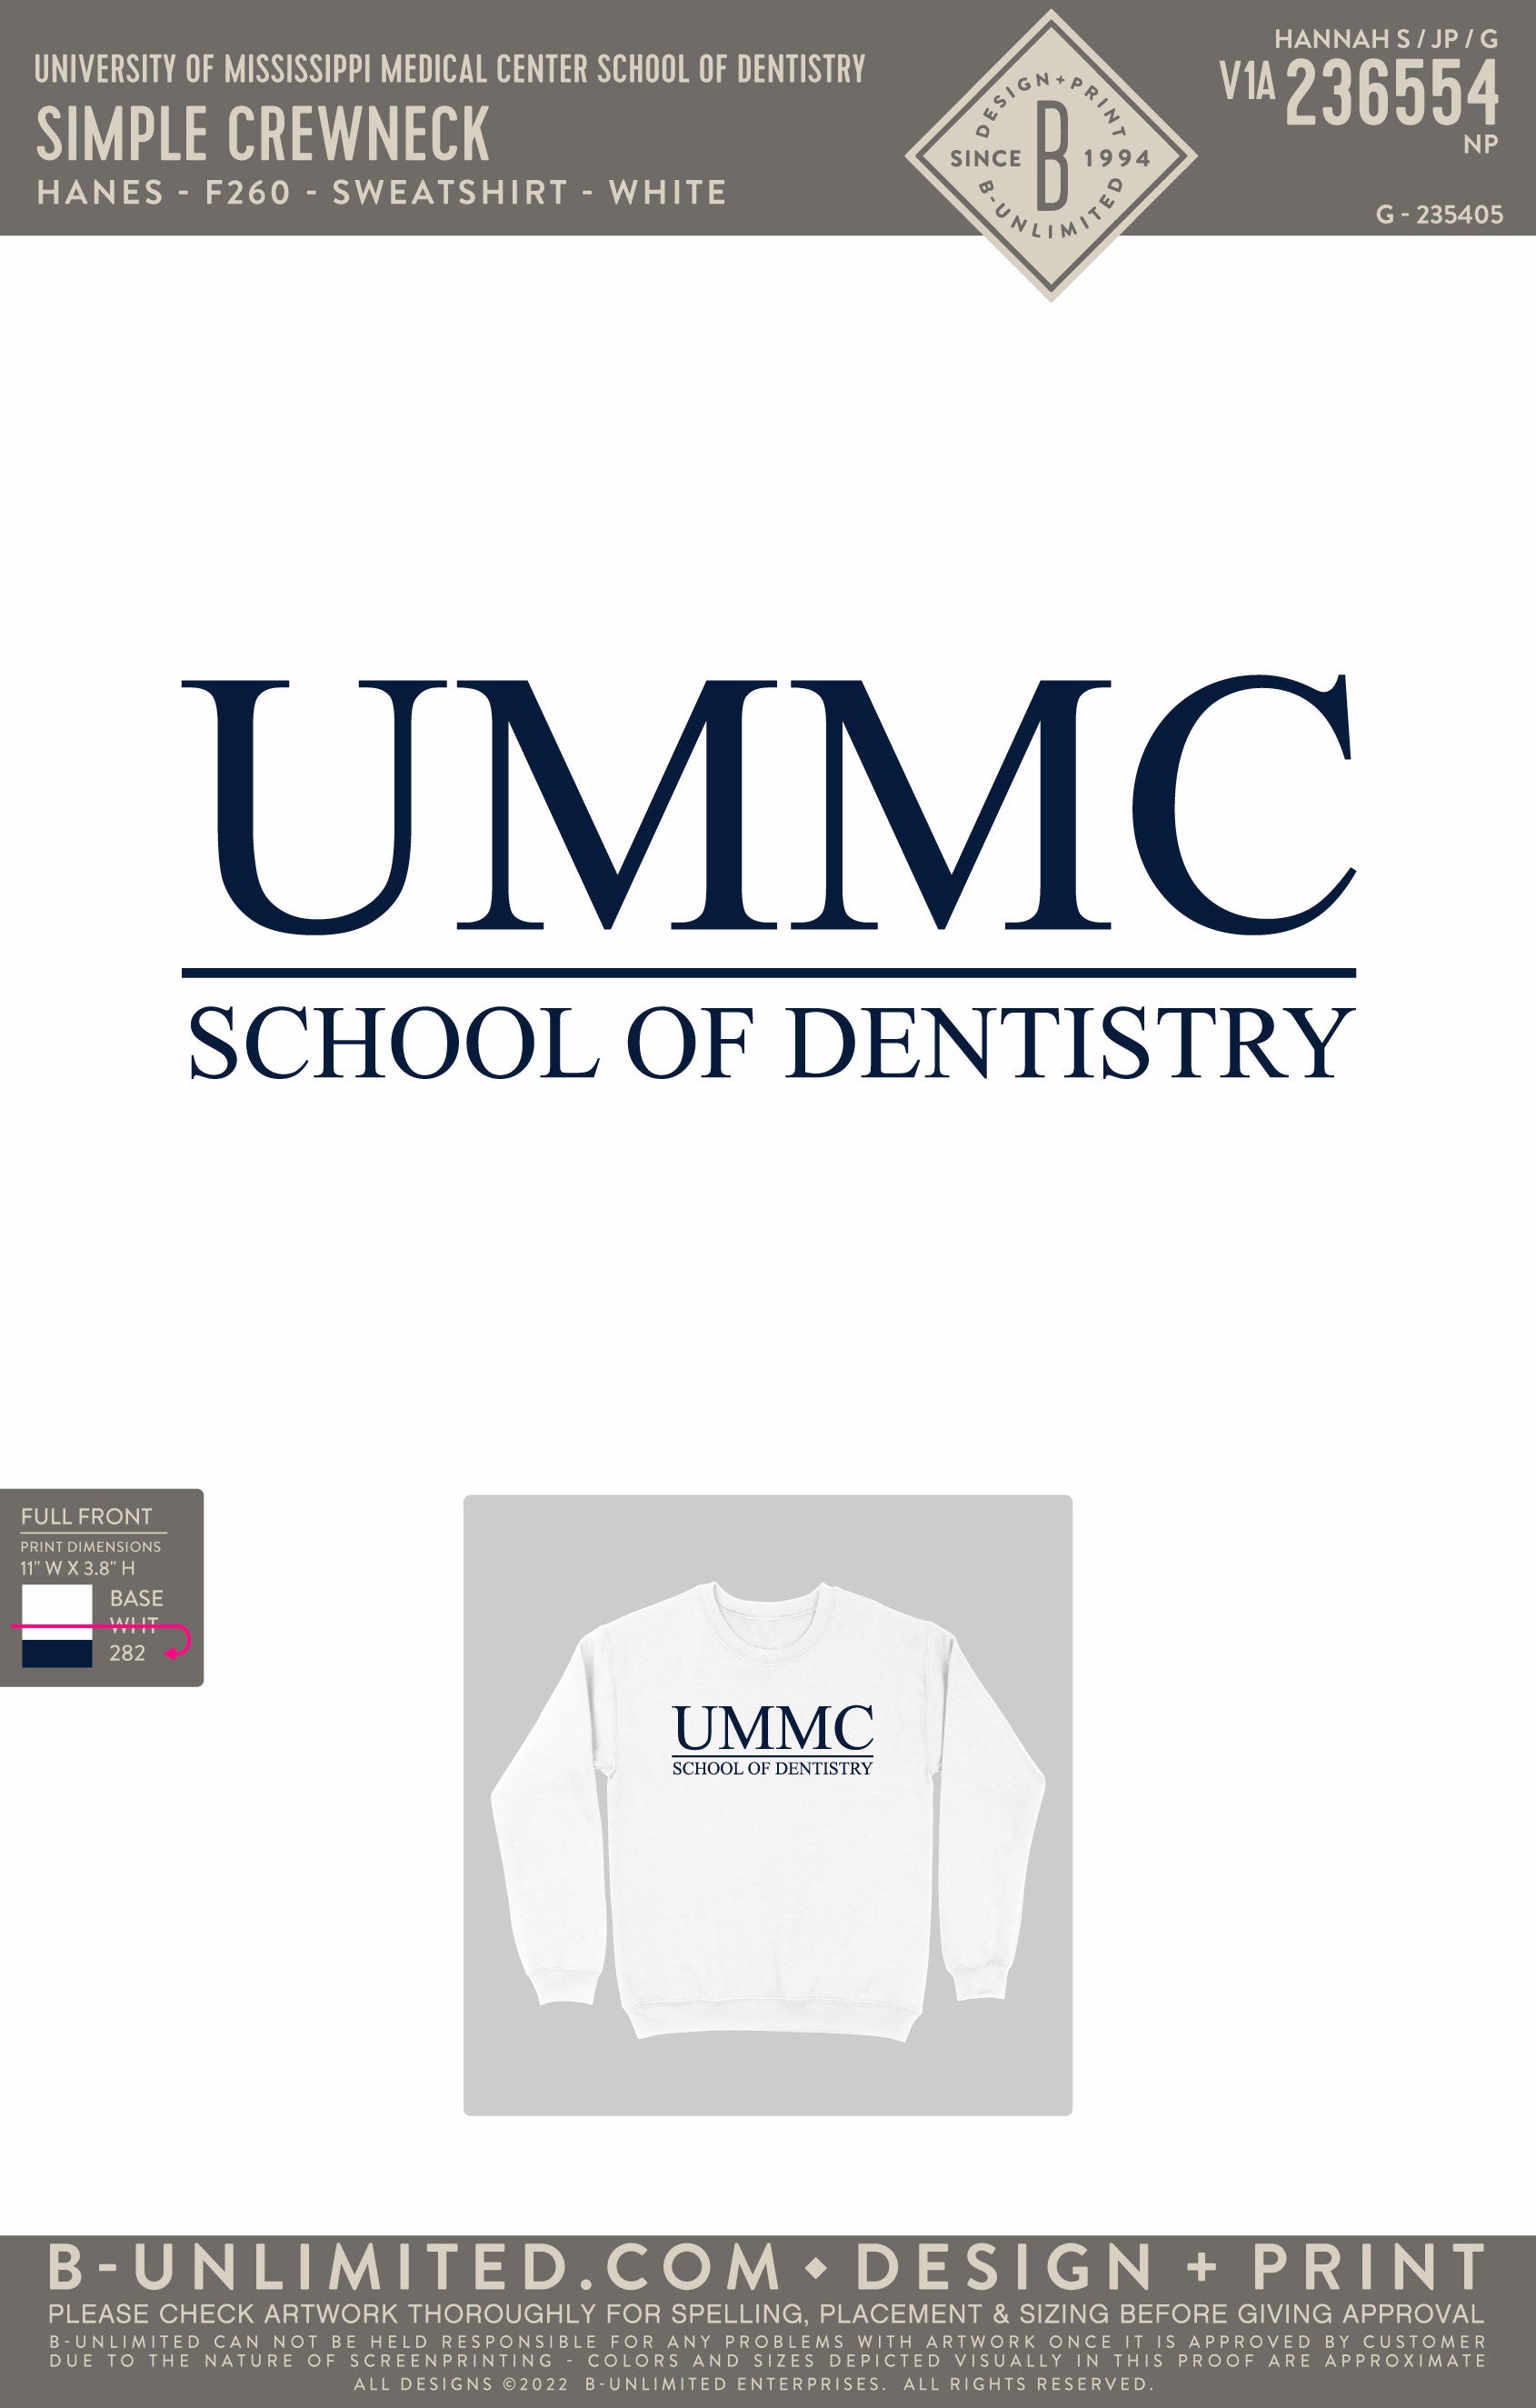 University of Mississippi Medical Center School of Dentistry - Simple Crewneck - Hanes - F260 - Sweatshirt - White